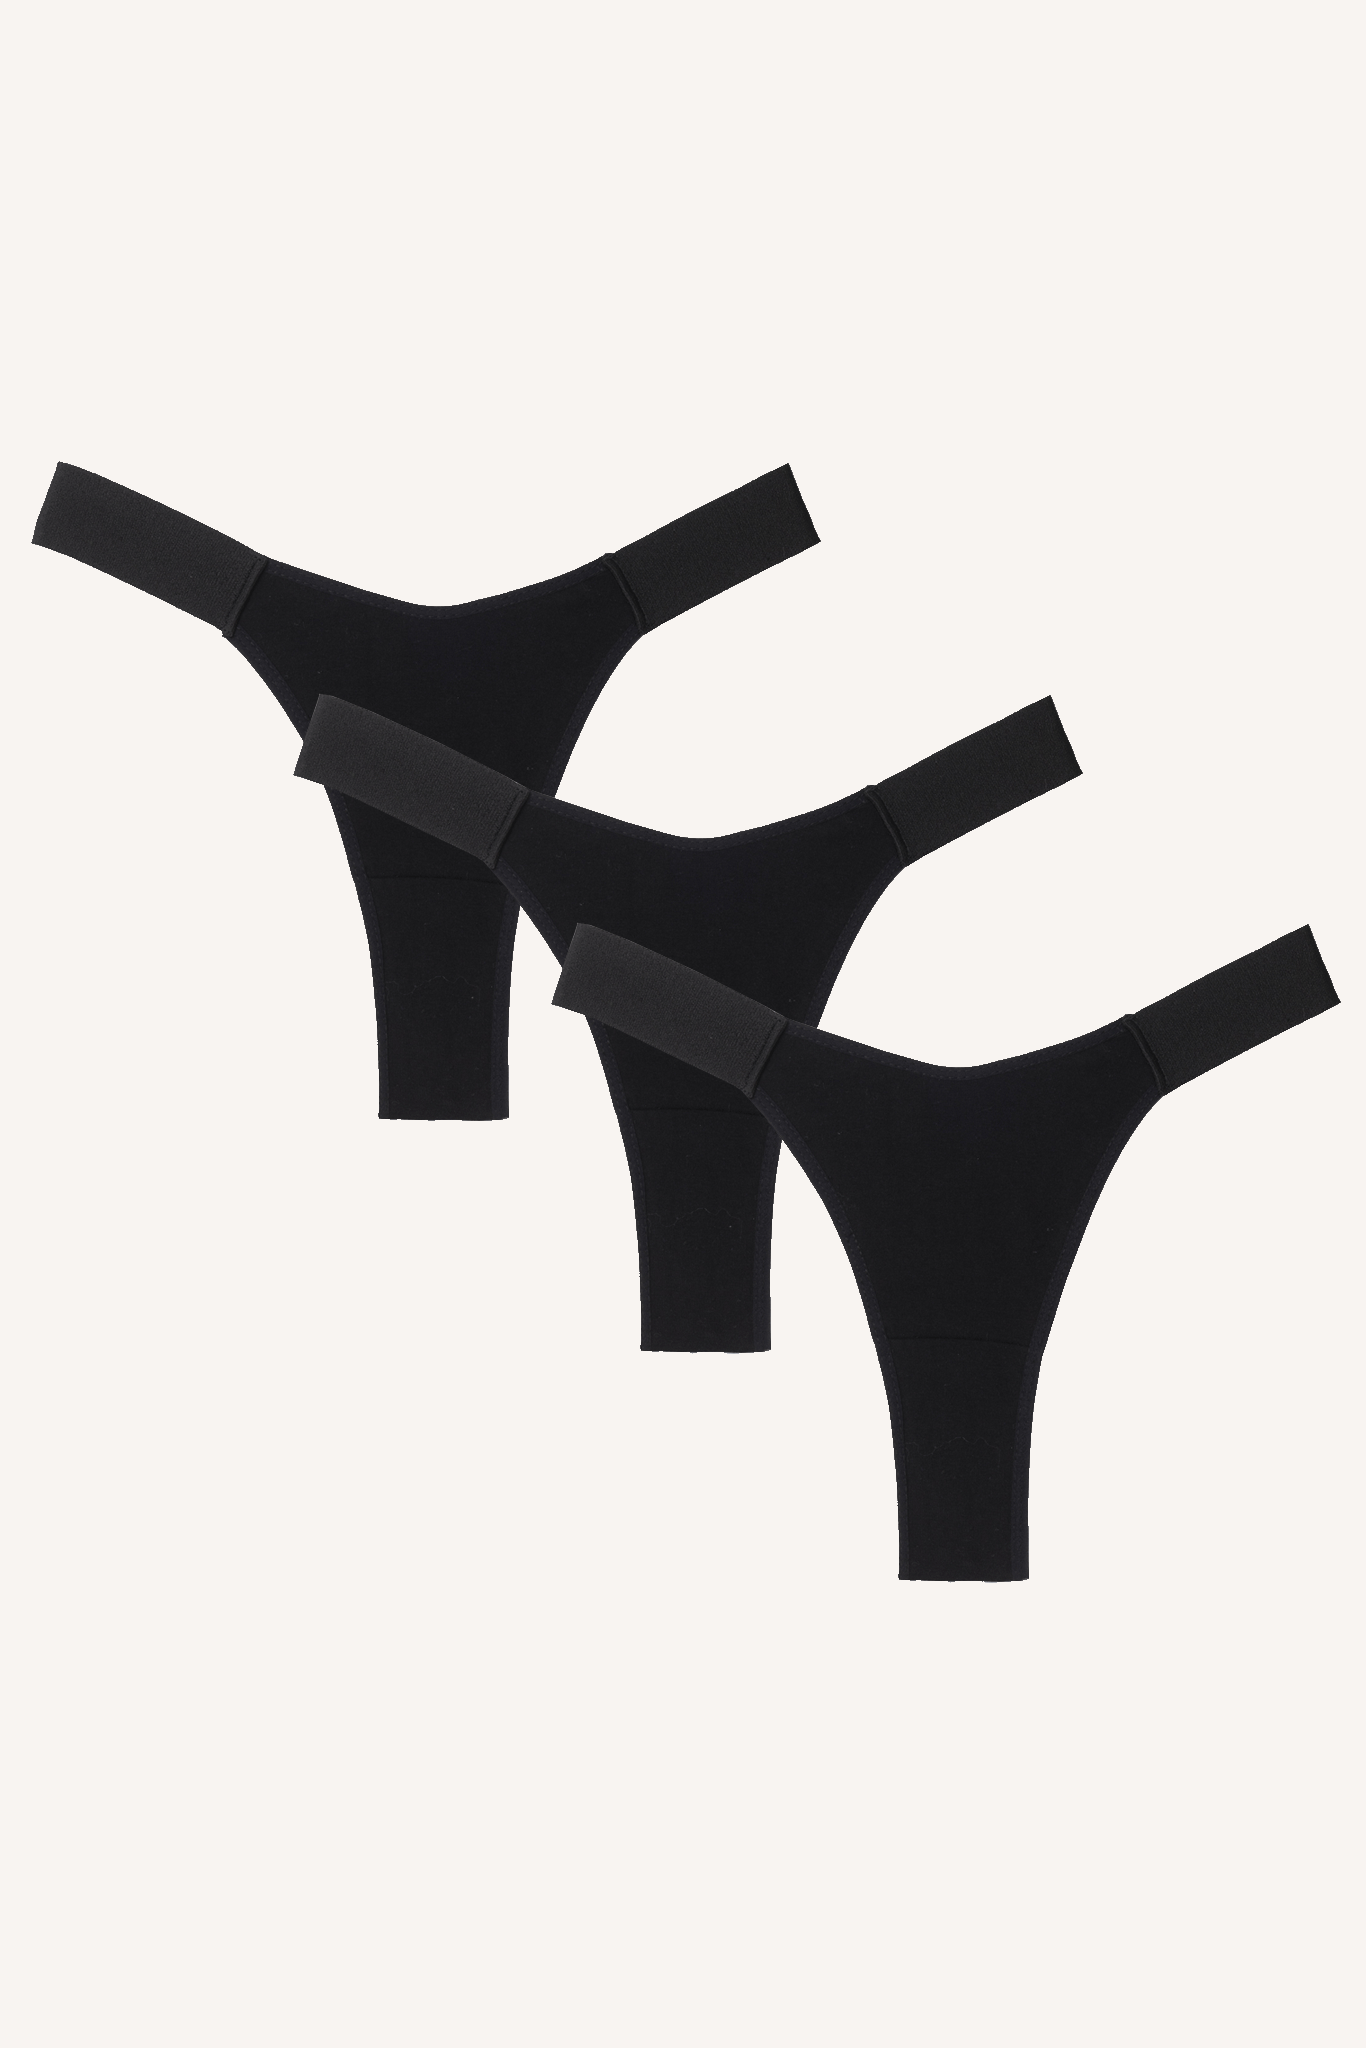 Toru & Naoko lingerie - Nina thong black cotton - x3 pack